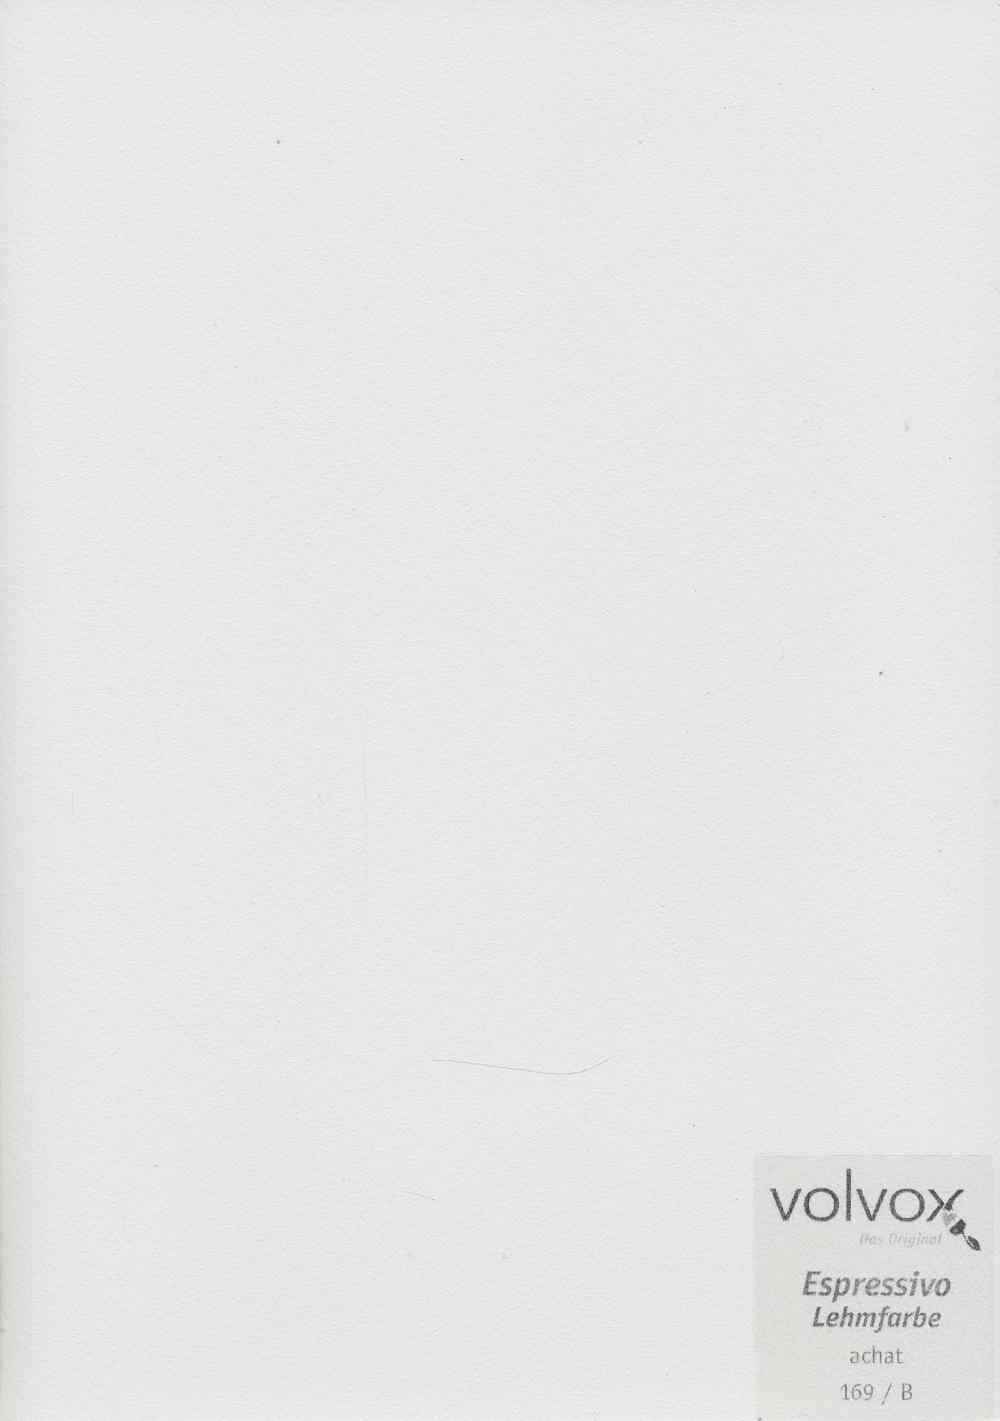 Volvox Espressivo Lehmfarbe 169 achat 